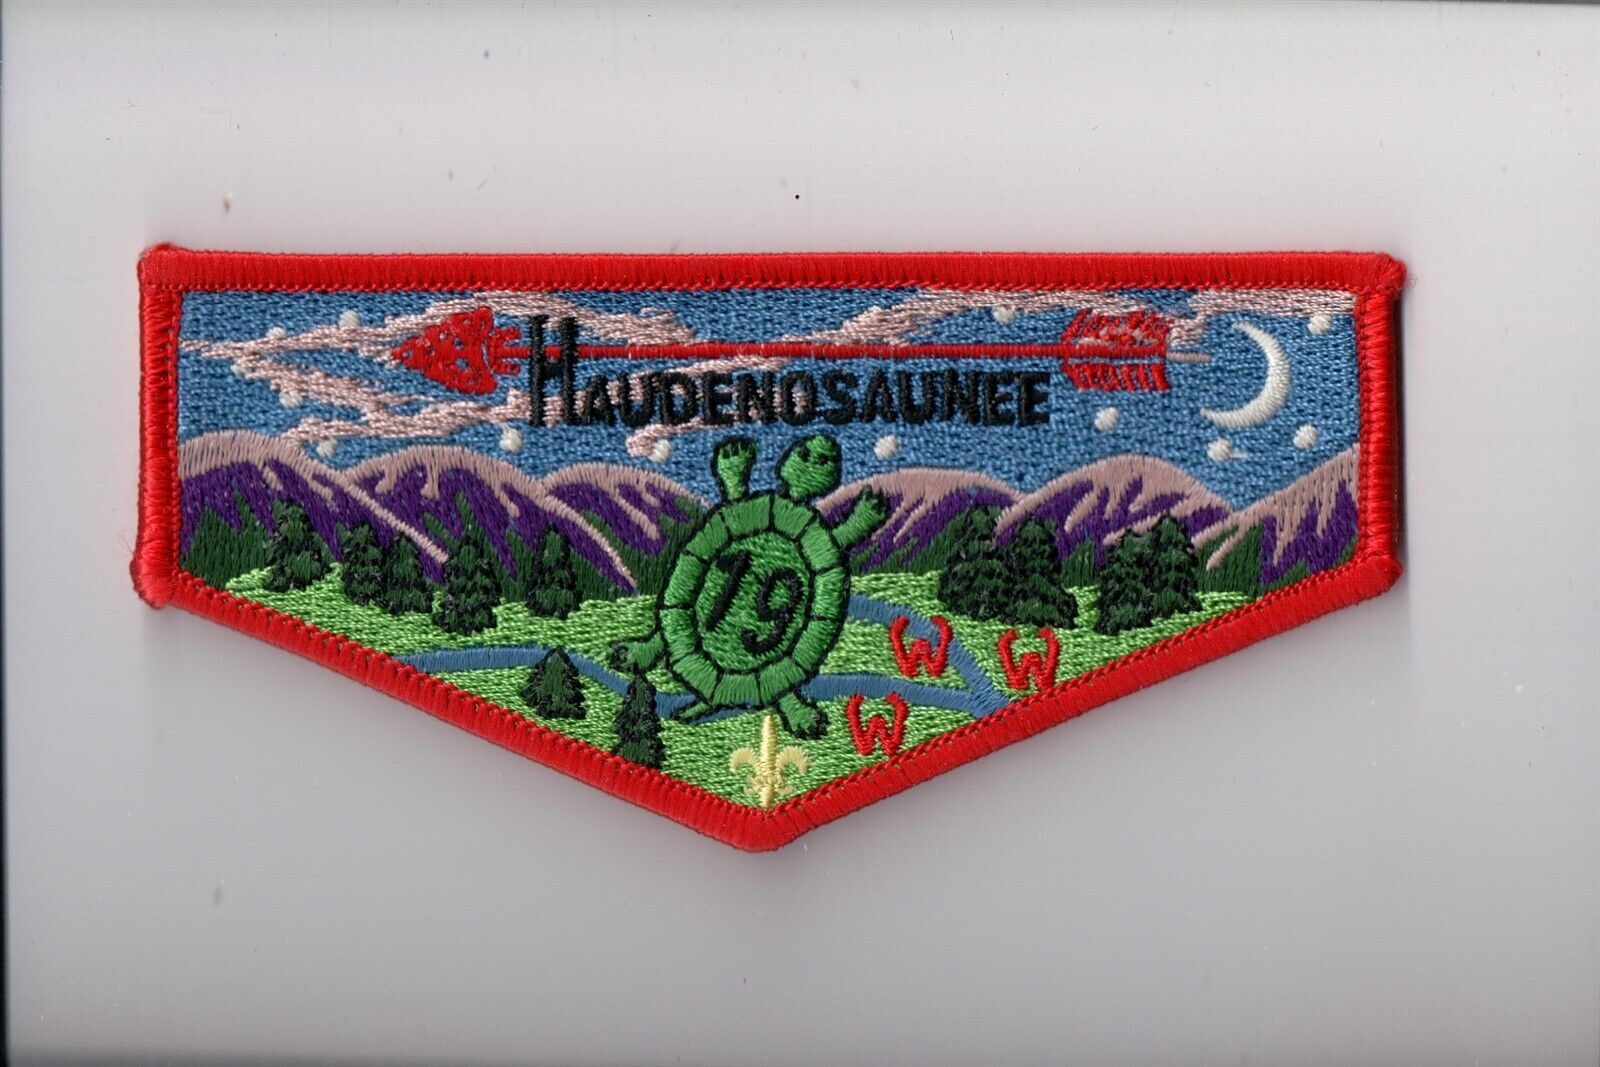 Lodge 19 Haudenosaunee S-2 OA flap (WW)